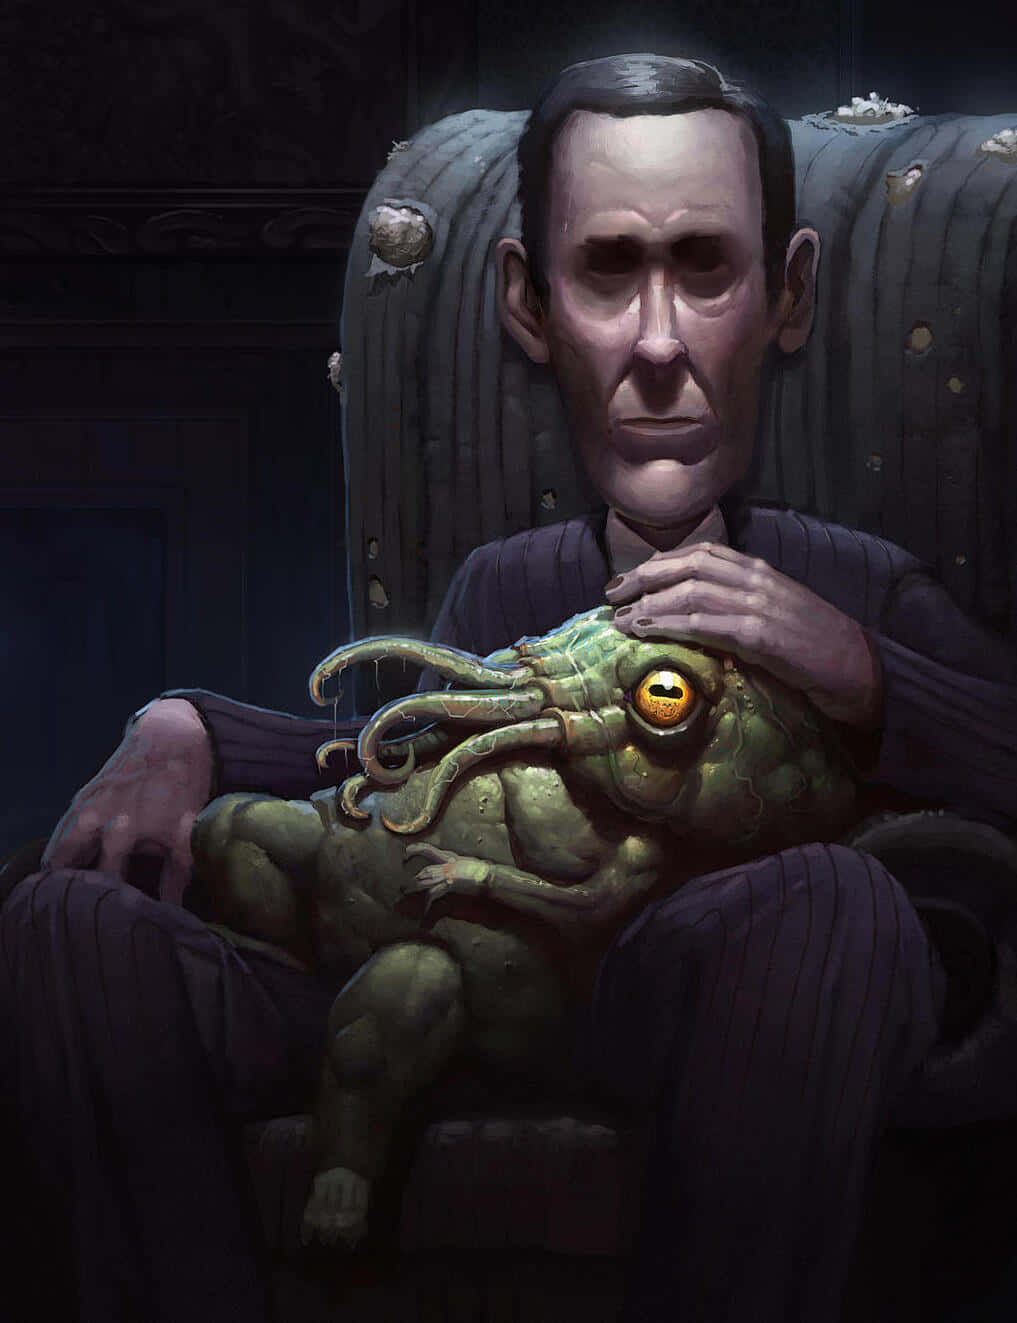 The Eldritch terror of H.P. Lovecraft